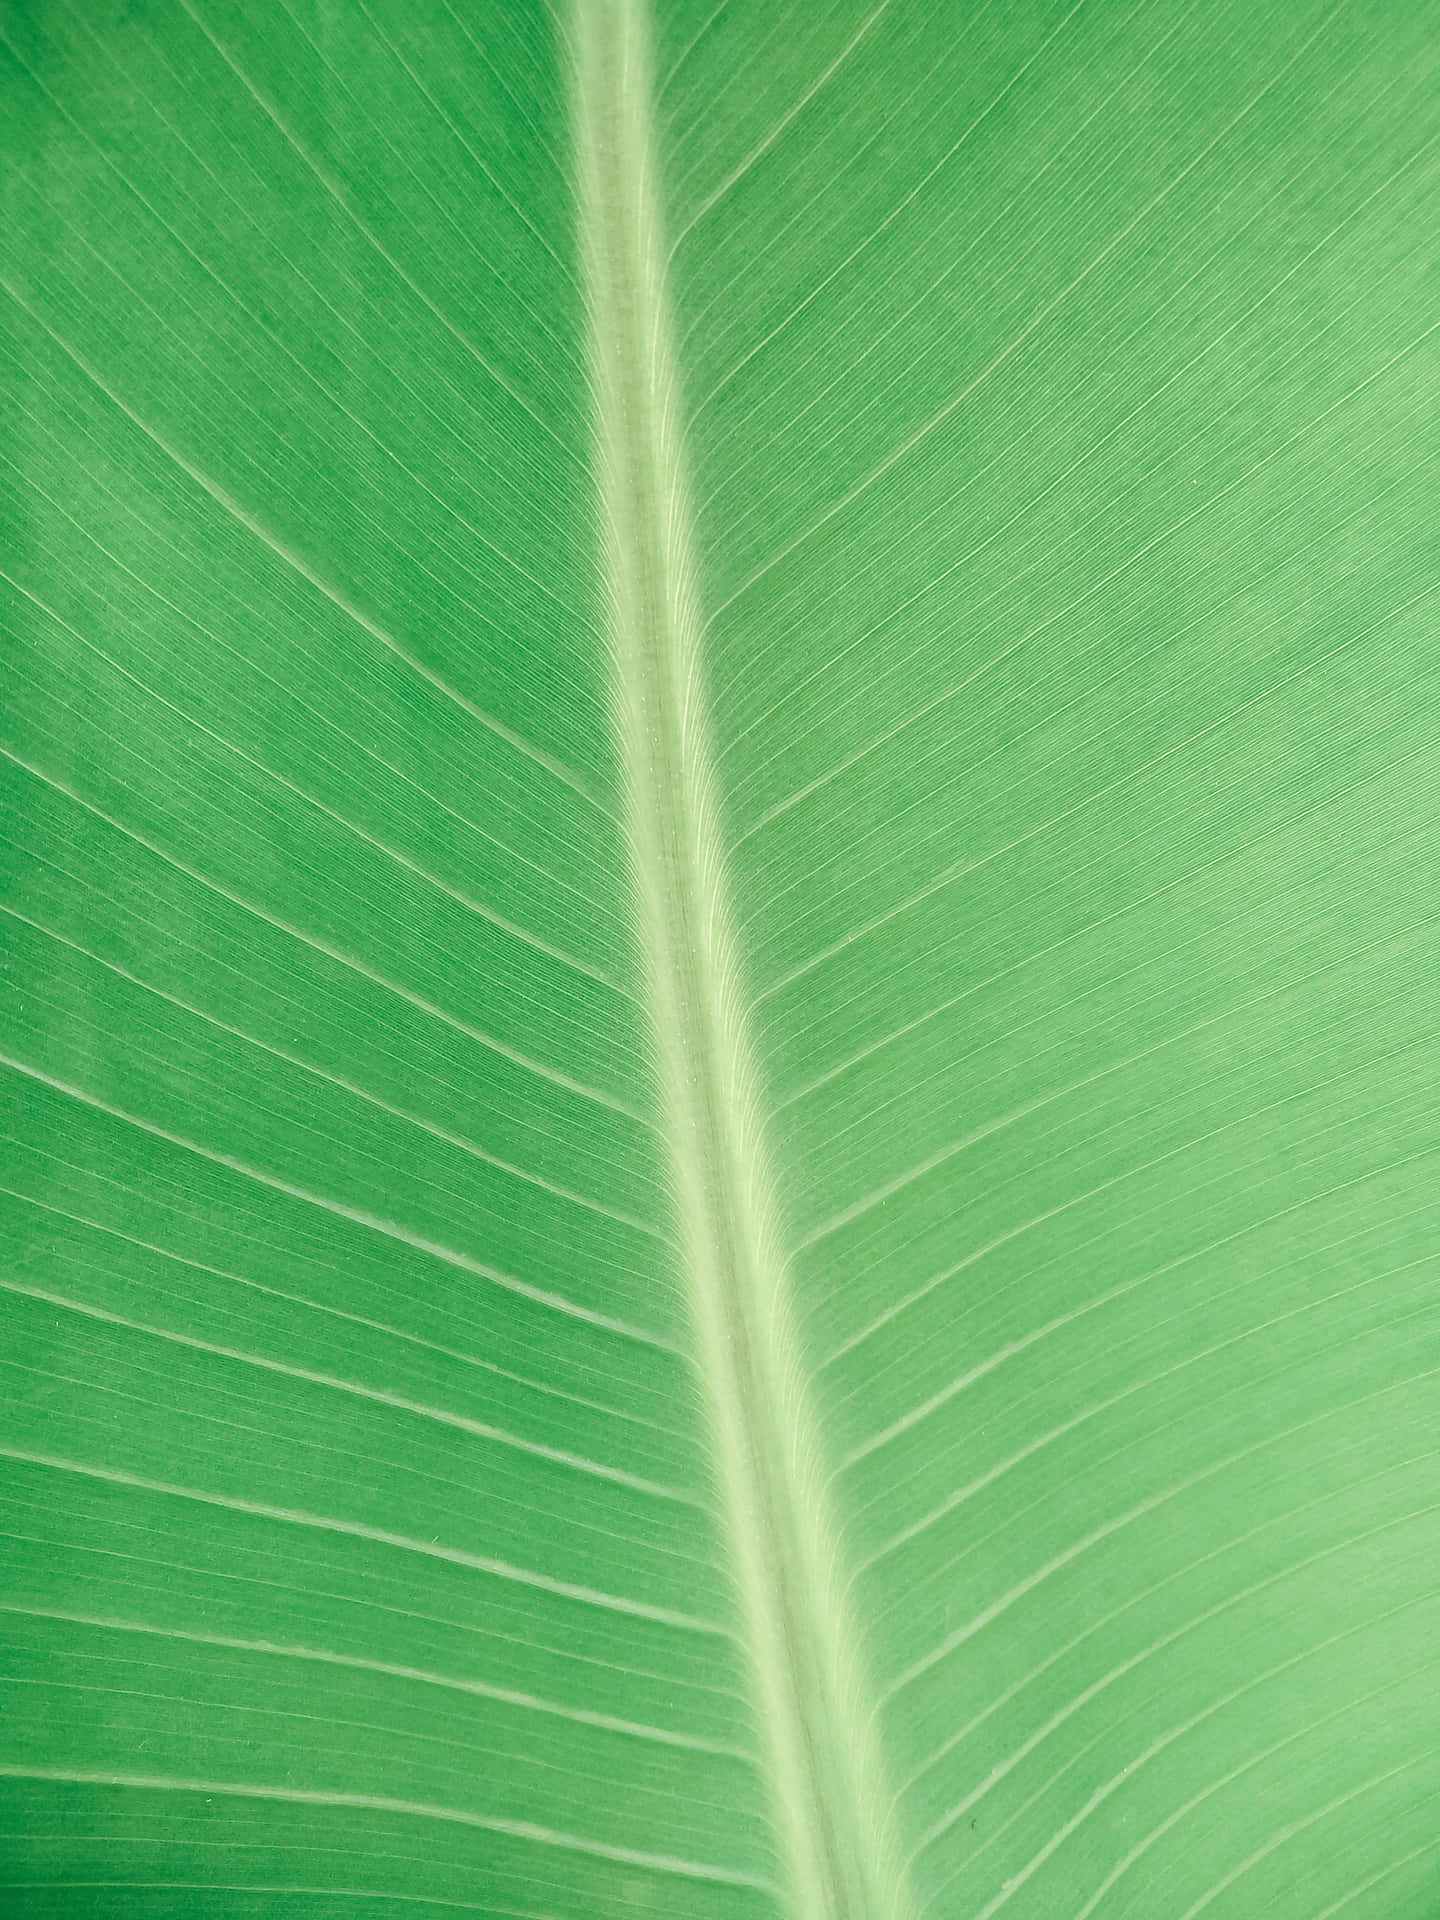 Fresh, green Banana Leaf with veins running through it